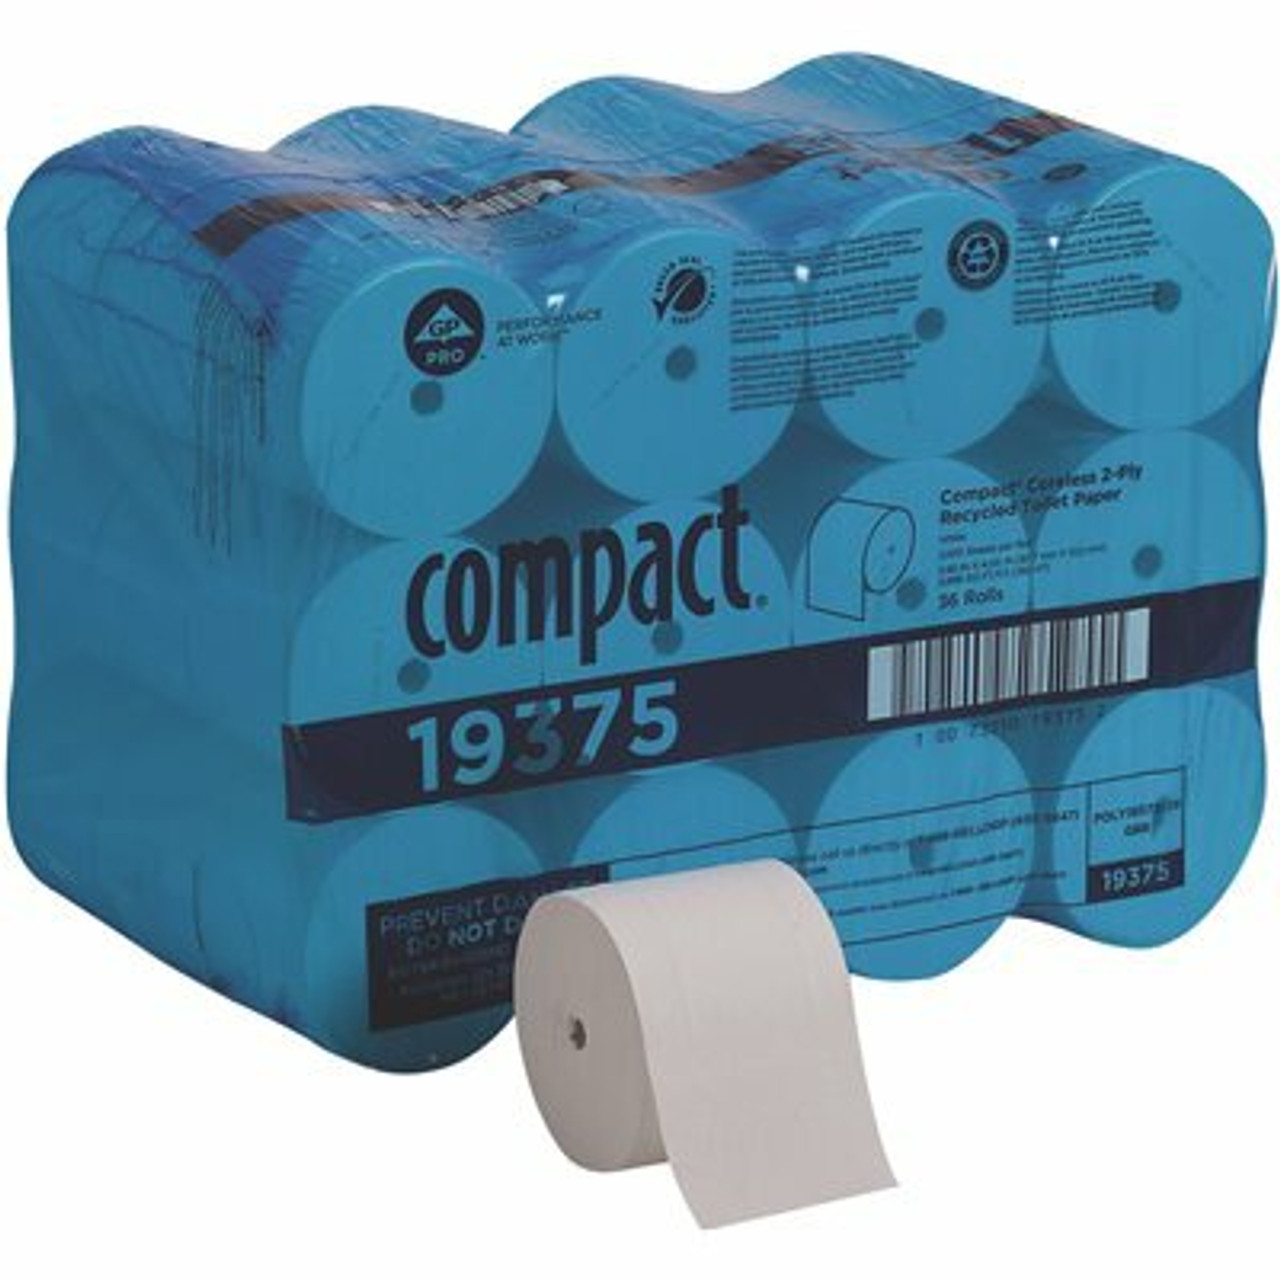 Compact 2-Ply White Coreless Bath Tissue Toilet Paper (36-Rolls Per Case)